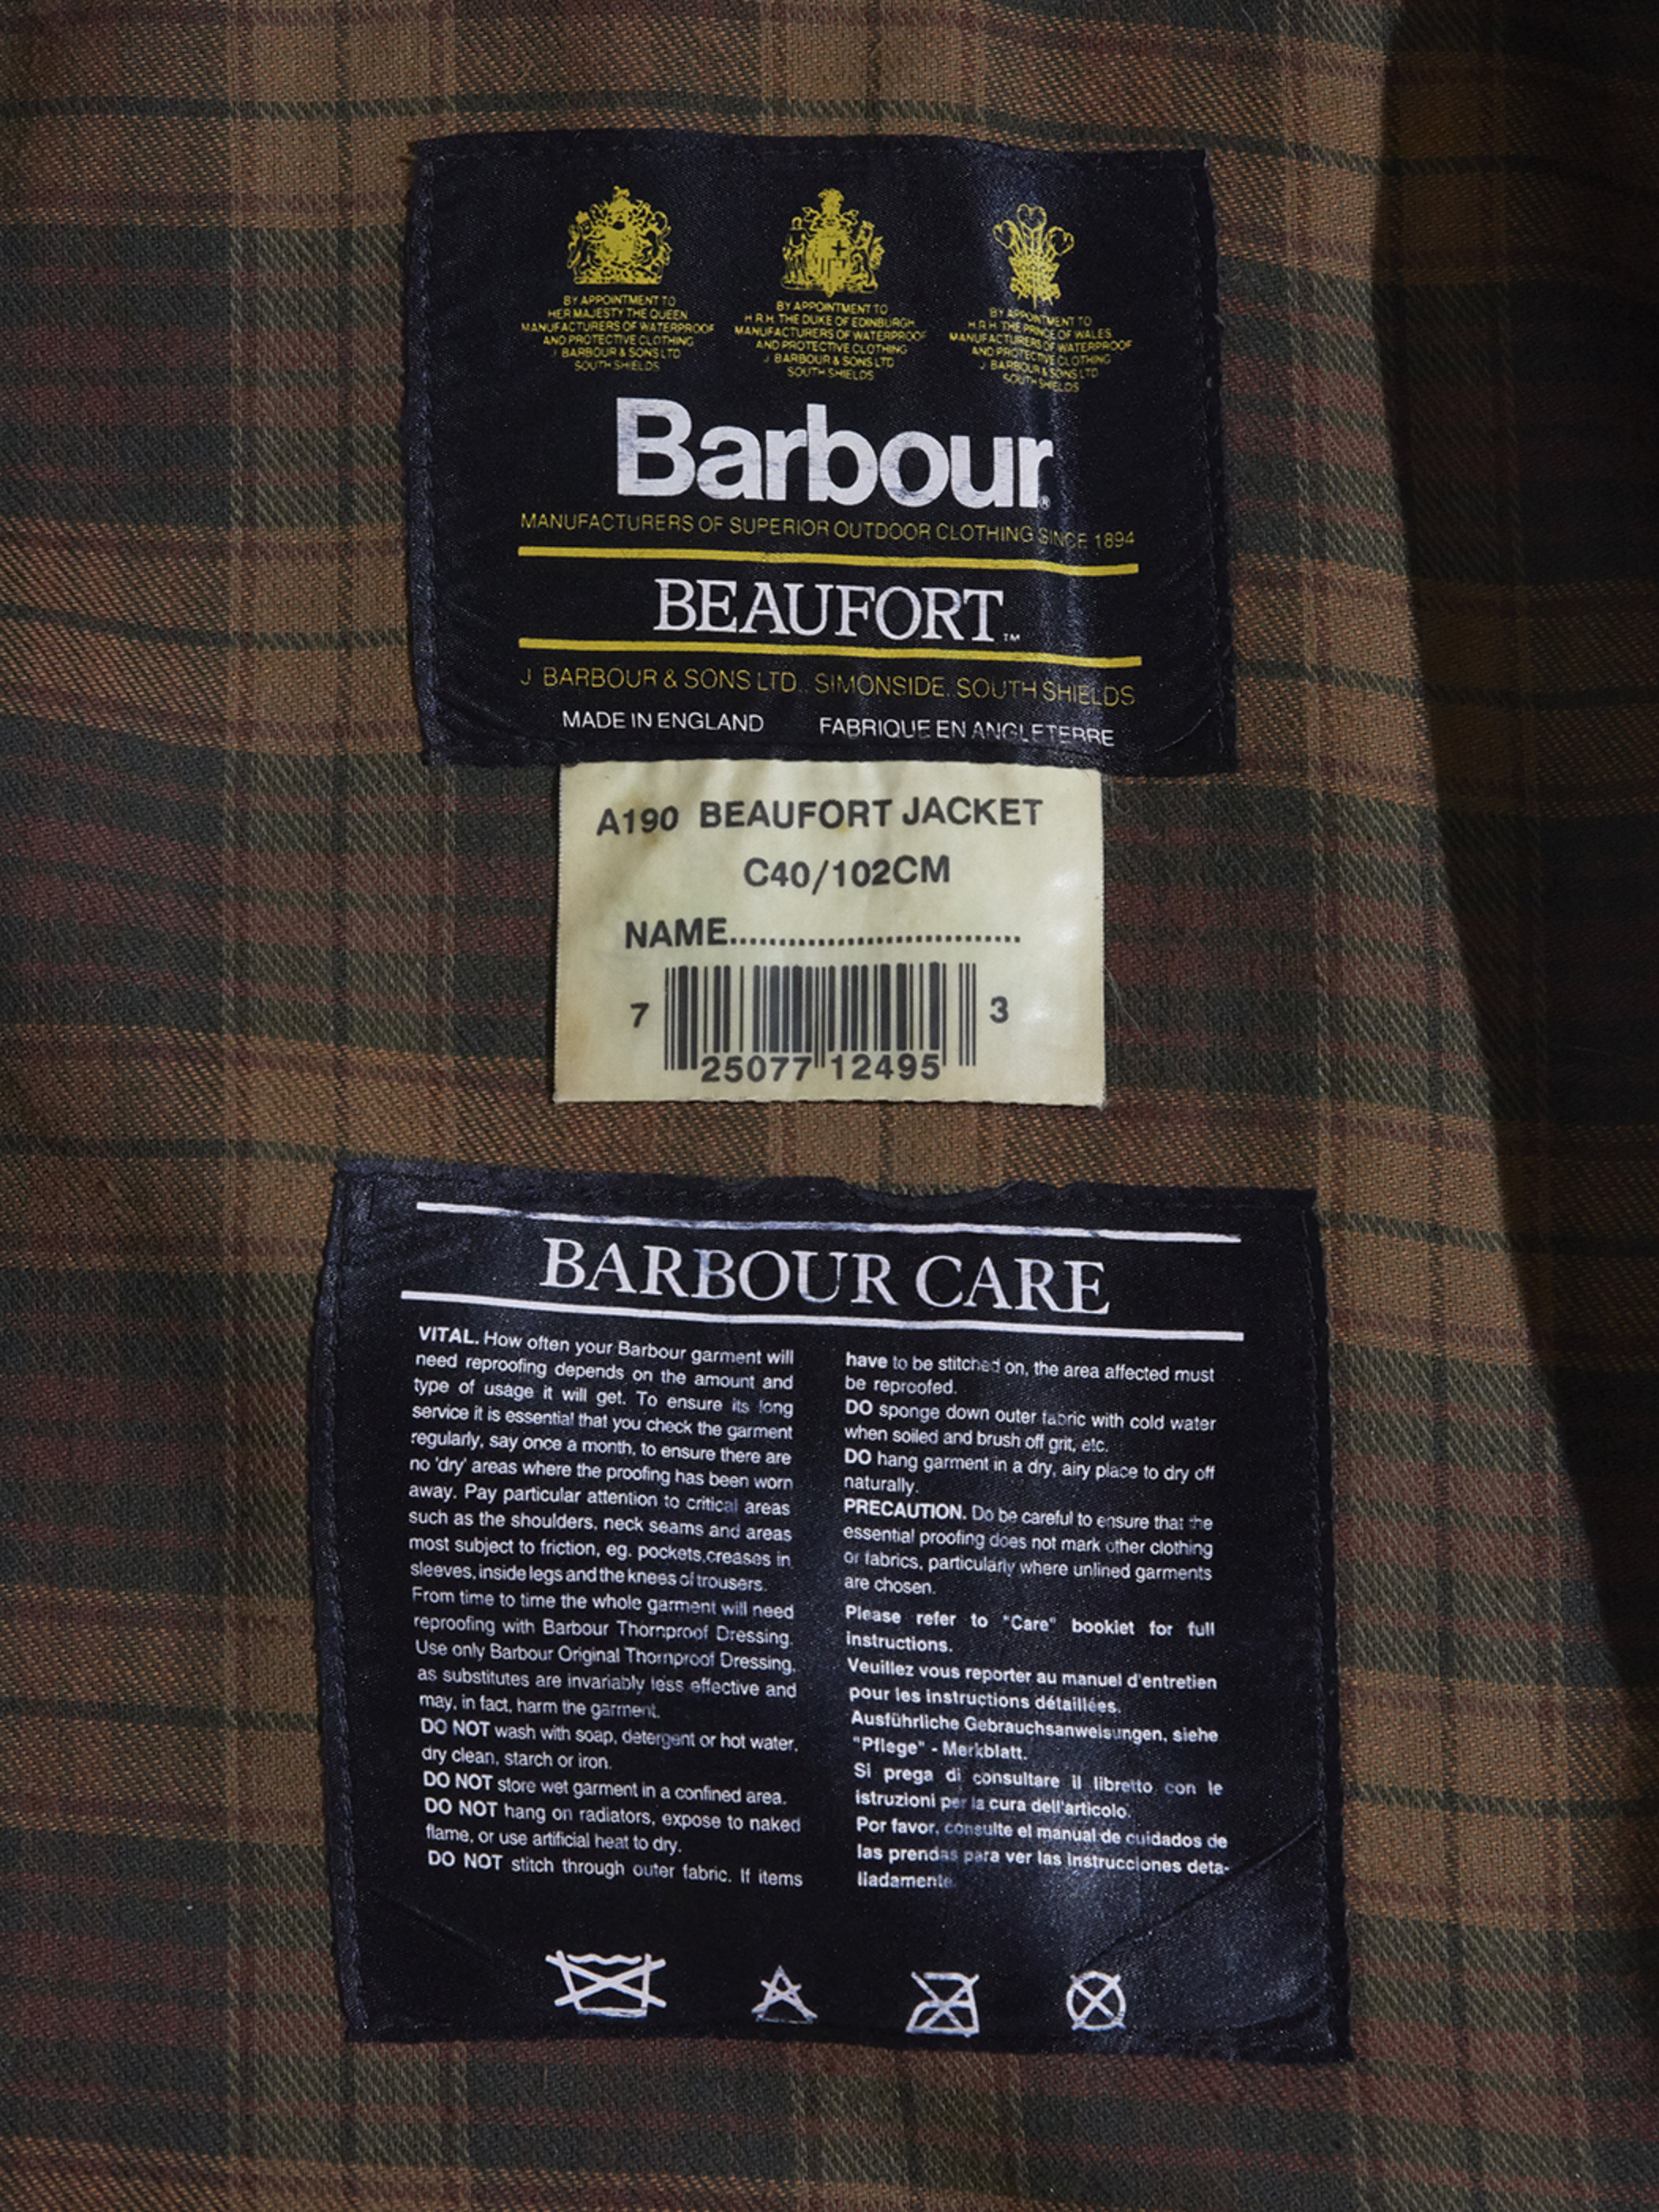 1994y "Barbour" 3warrant BEAUFORT oiled jacket -BROWN-